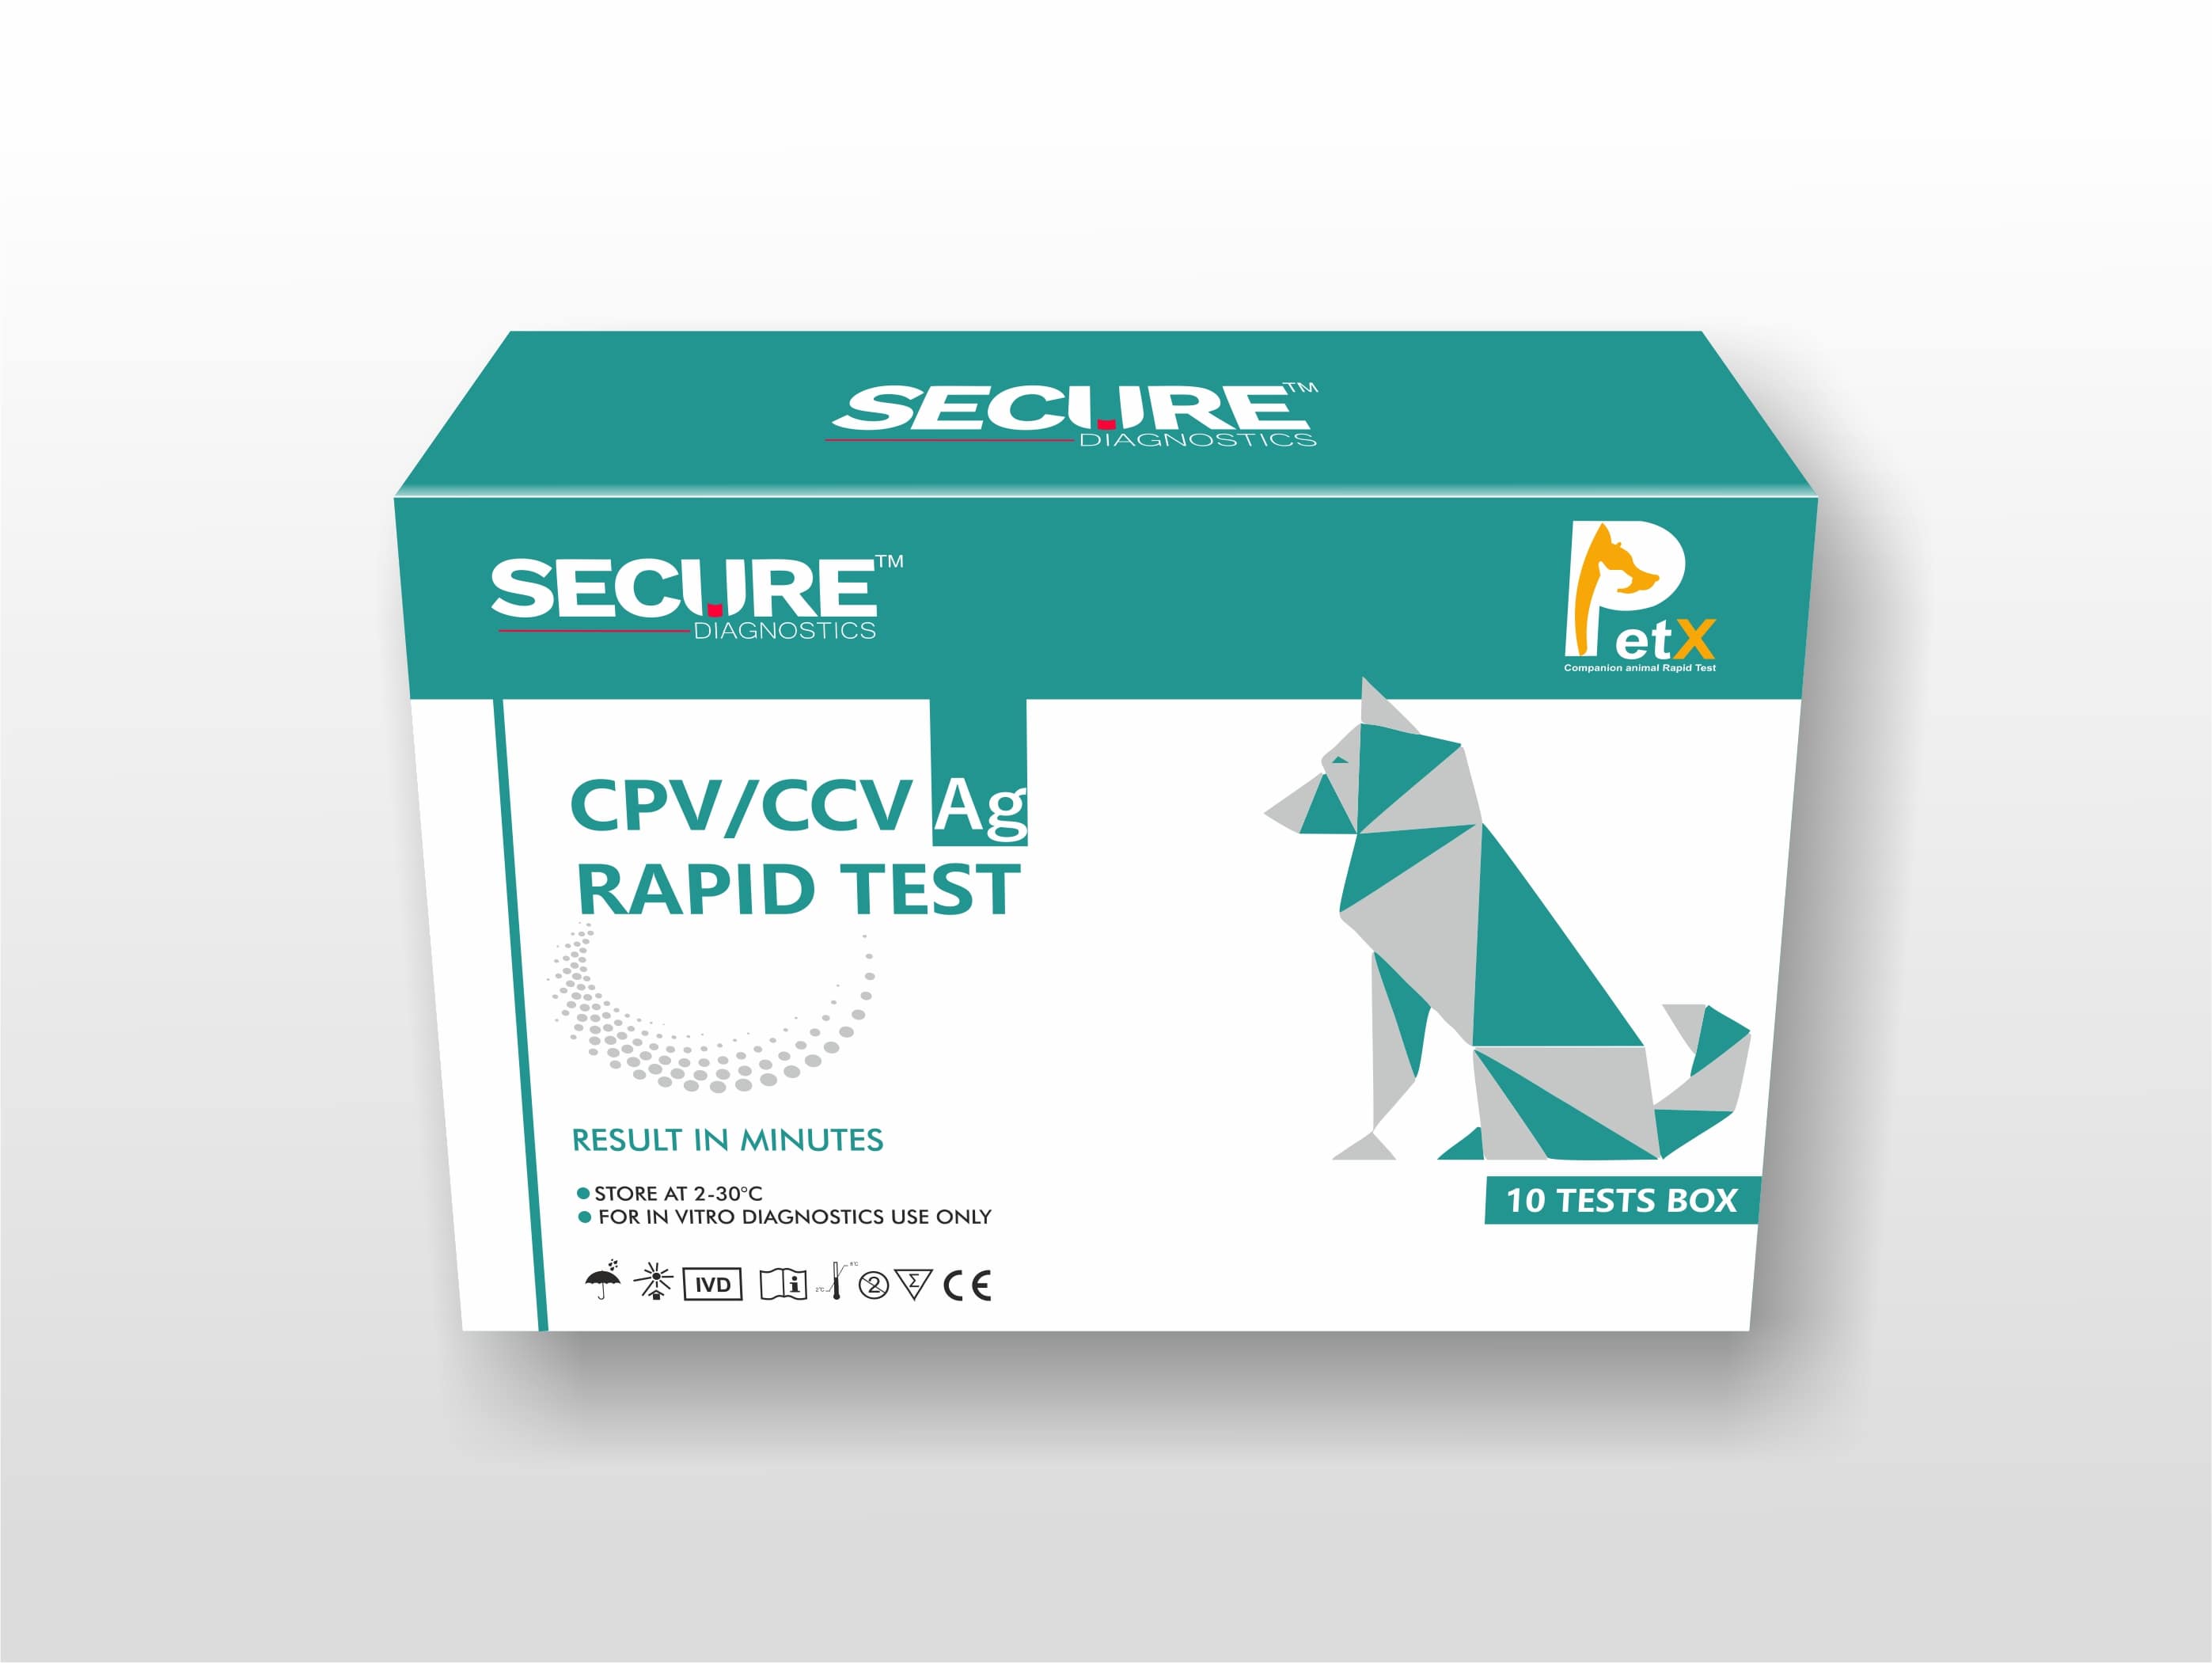 Canine Parvovirus/Coronavirus Quantitative (CPV/CCV Ag) Antigen Test kit